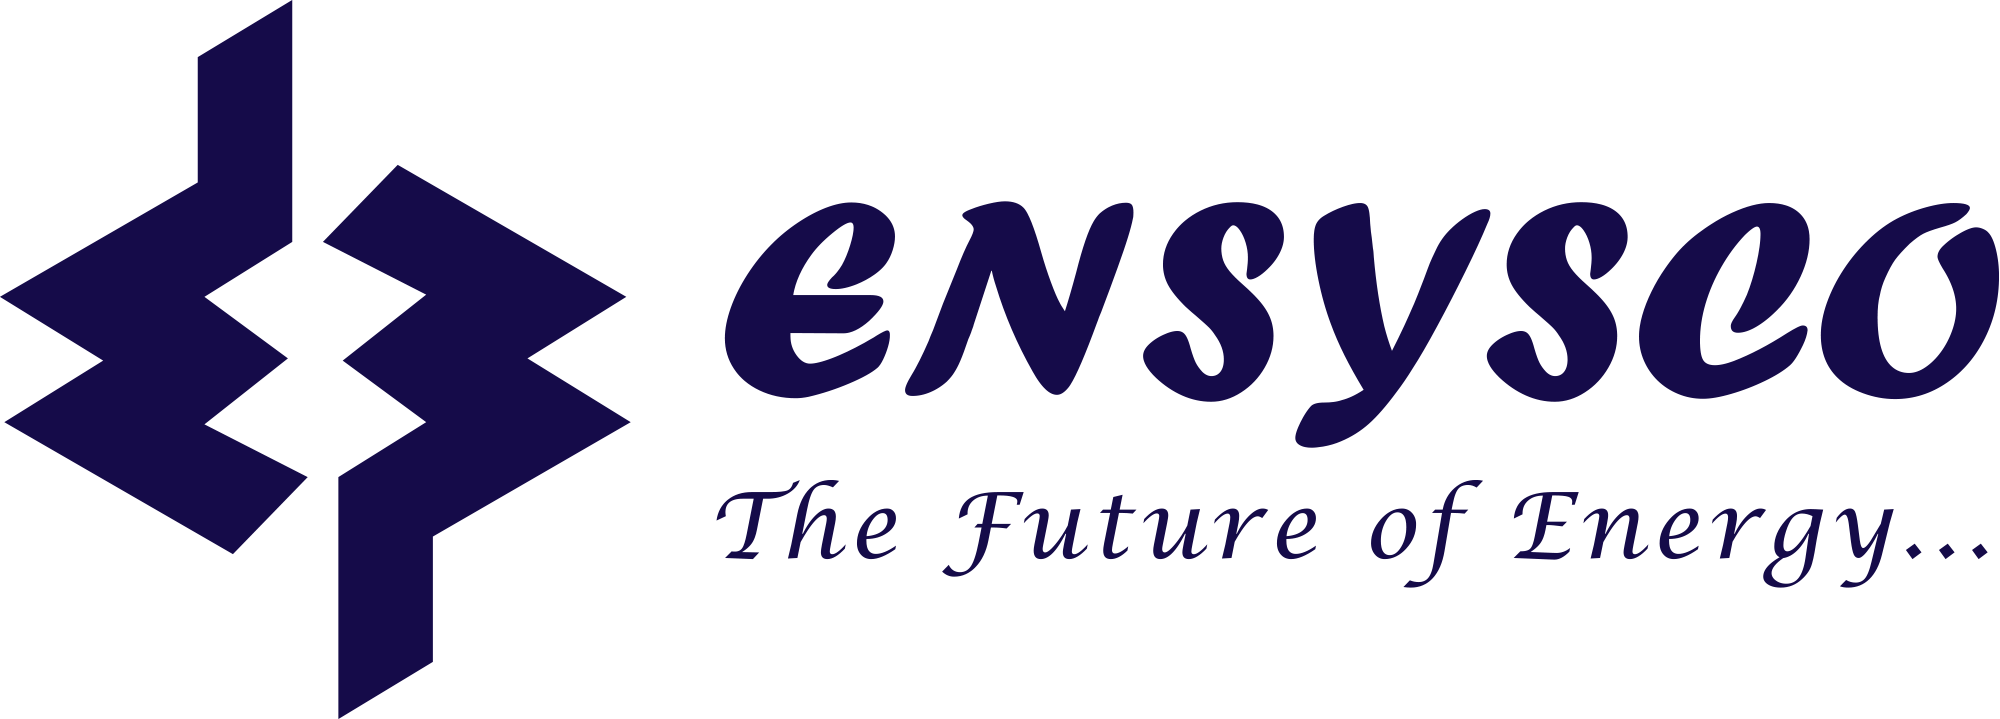 Ensysco Logo